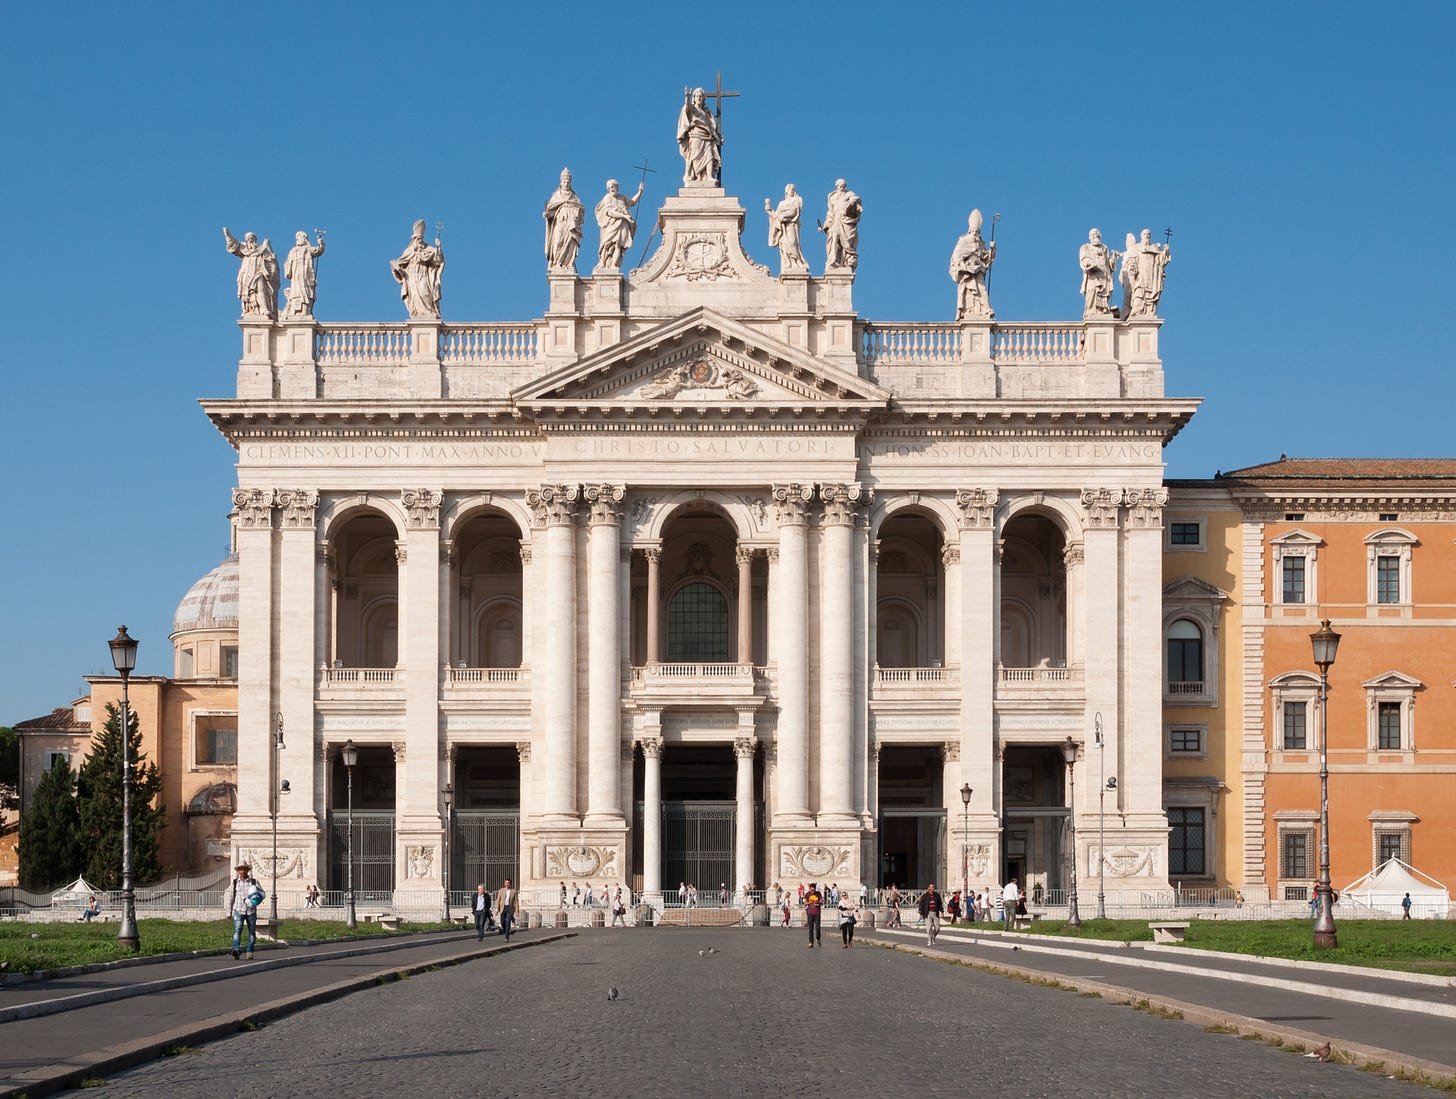 Archbasilica of Saint John Lateran - Wikipedia